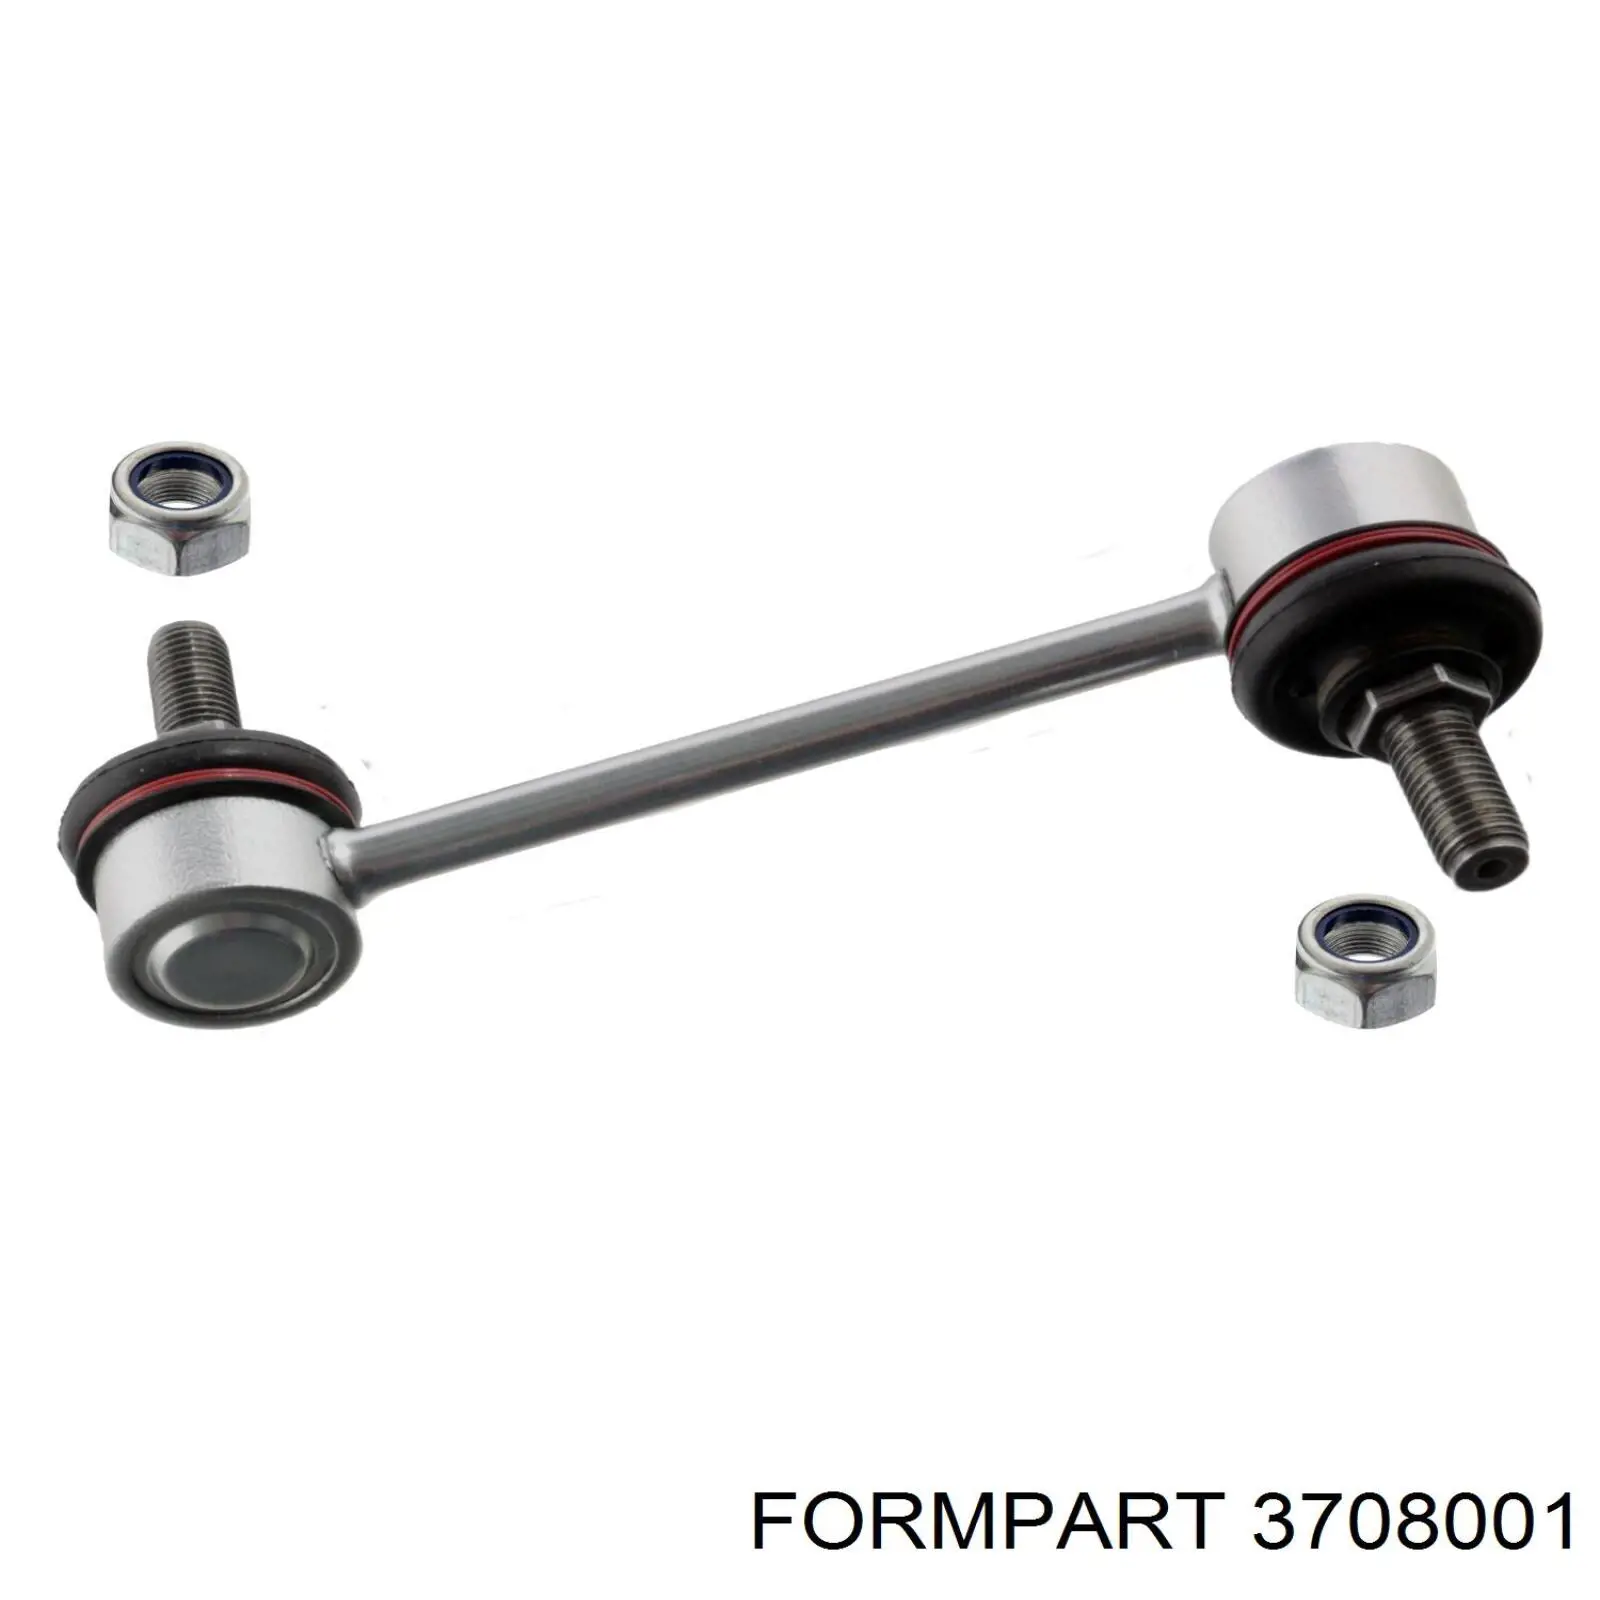 3708001 Formpart/Otoform soporte de barra estabilizadora trasera